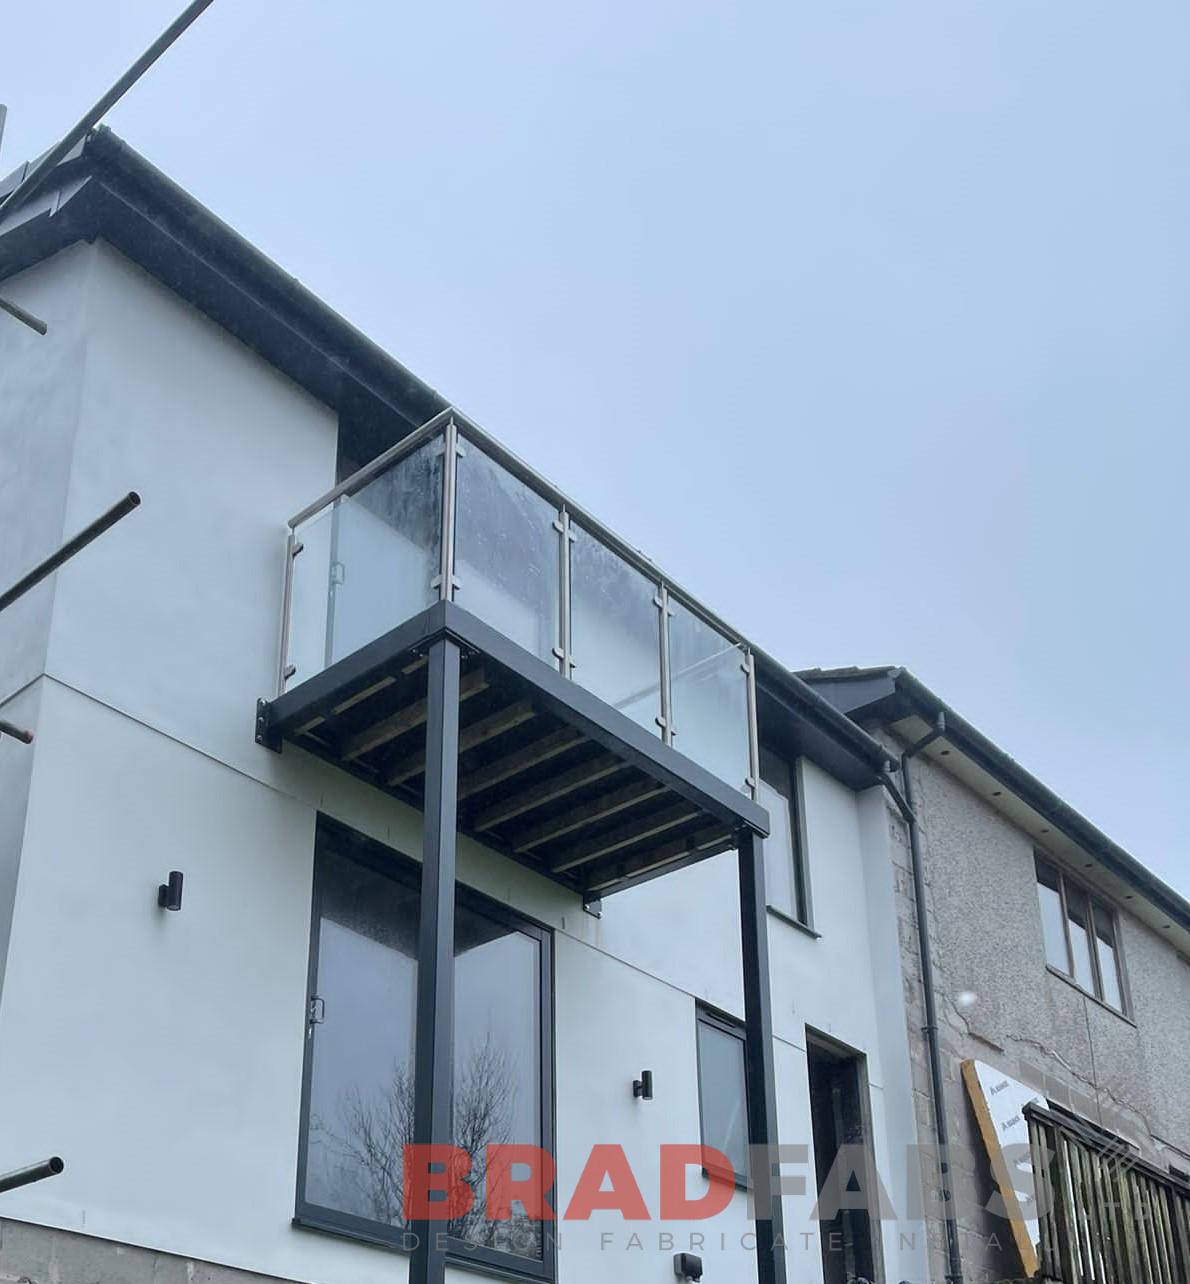 Bradfabs, steel balcony, metal balcony, stainless steel and glass balustrade, balcony with support legs, bespoke product